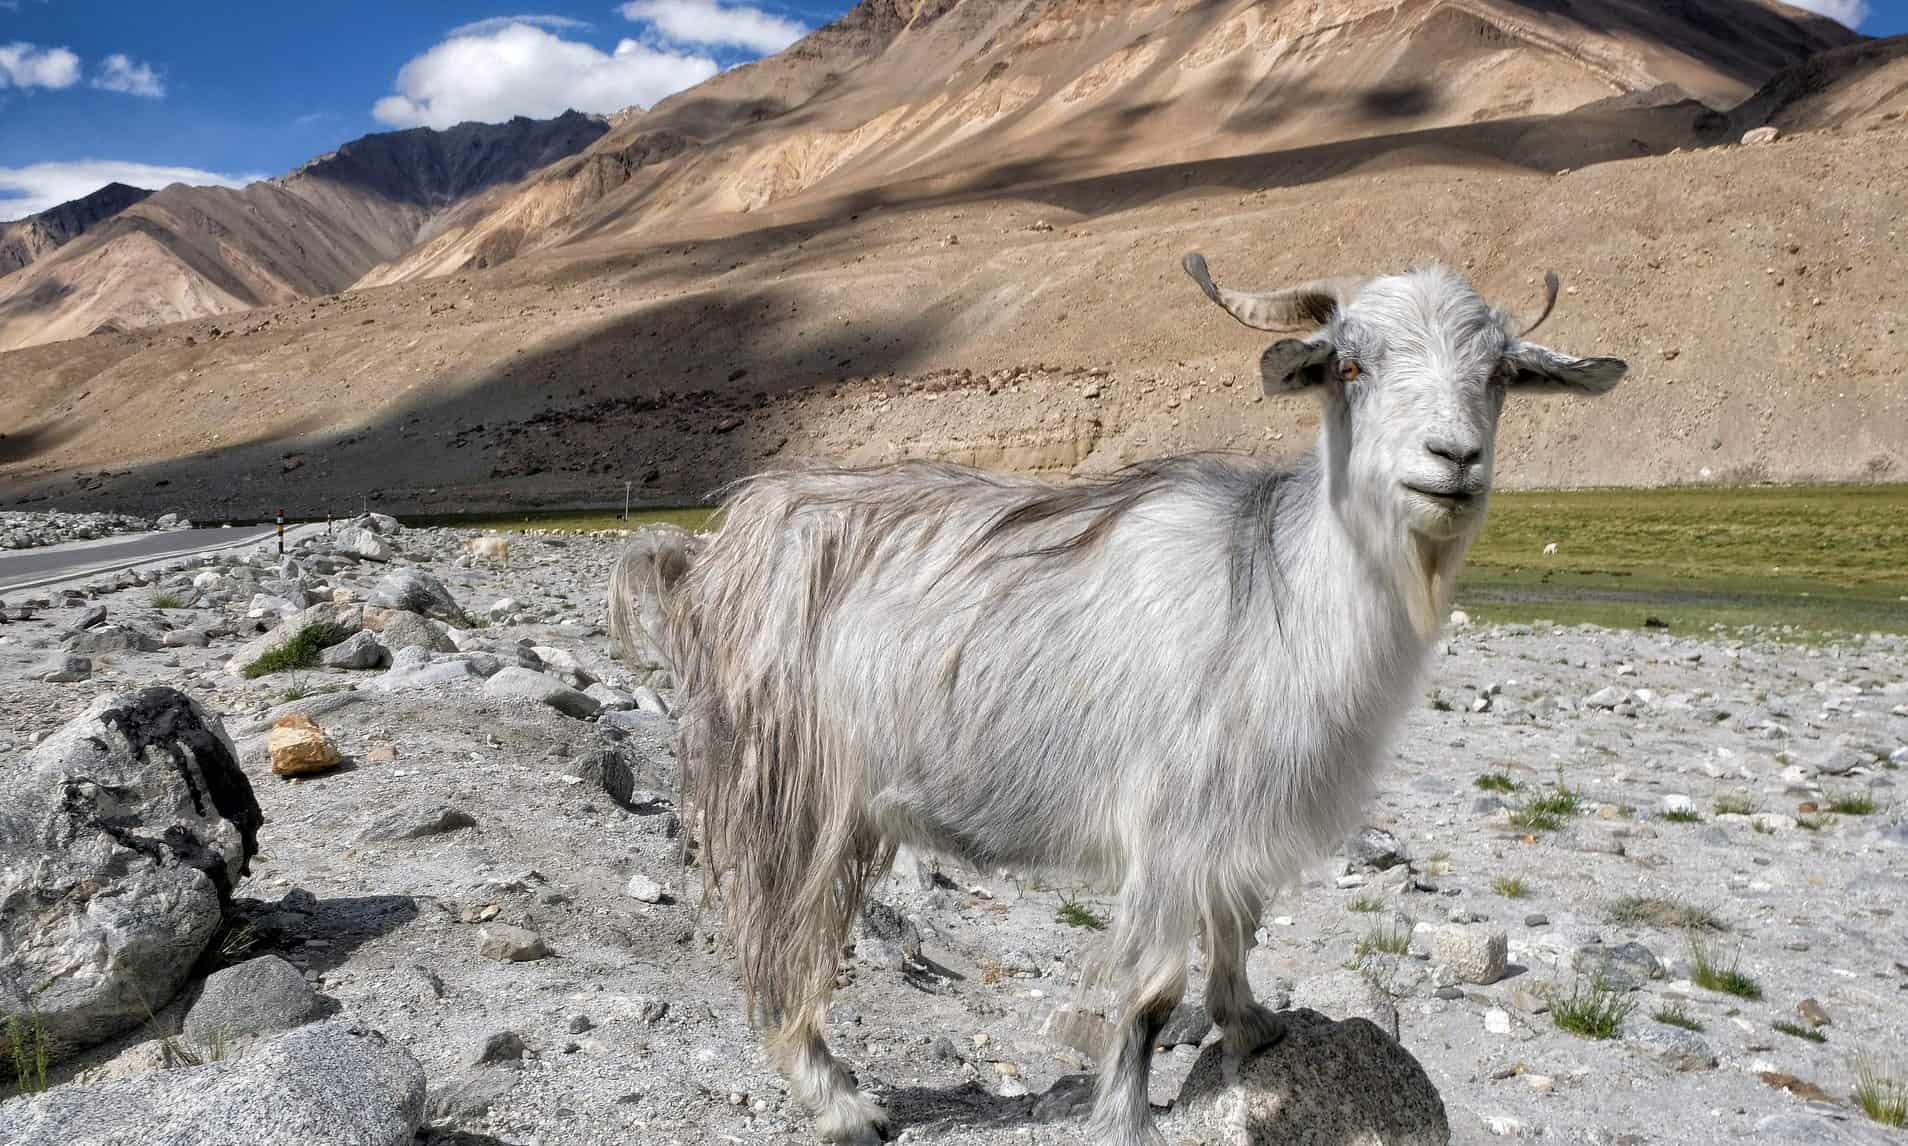 Tibetan Plateau Goat